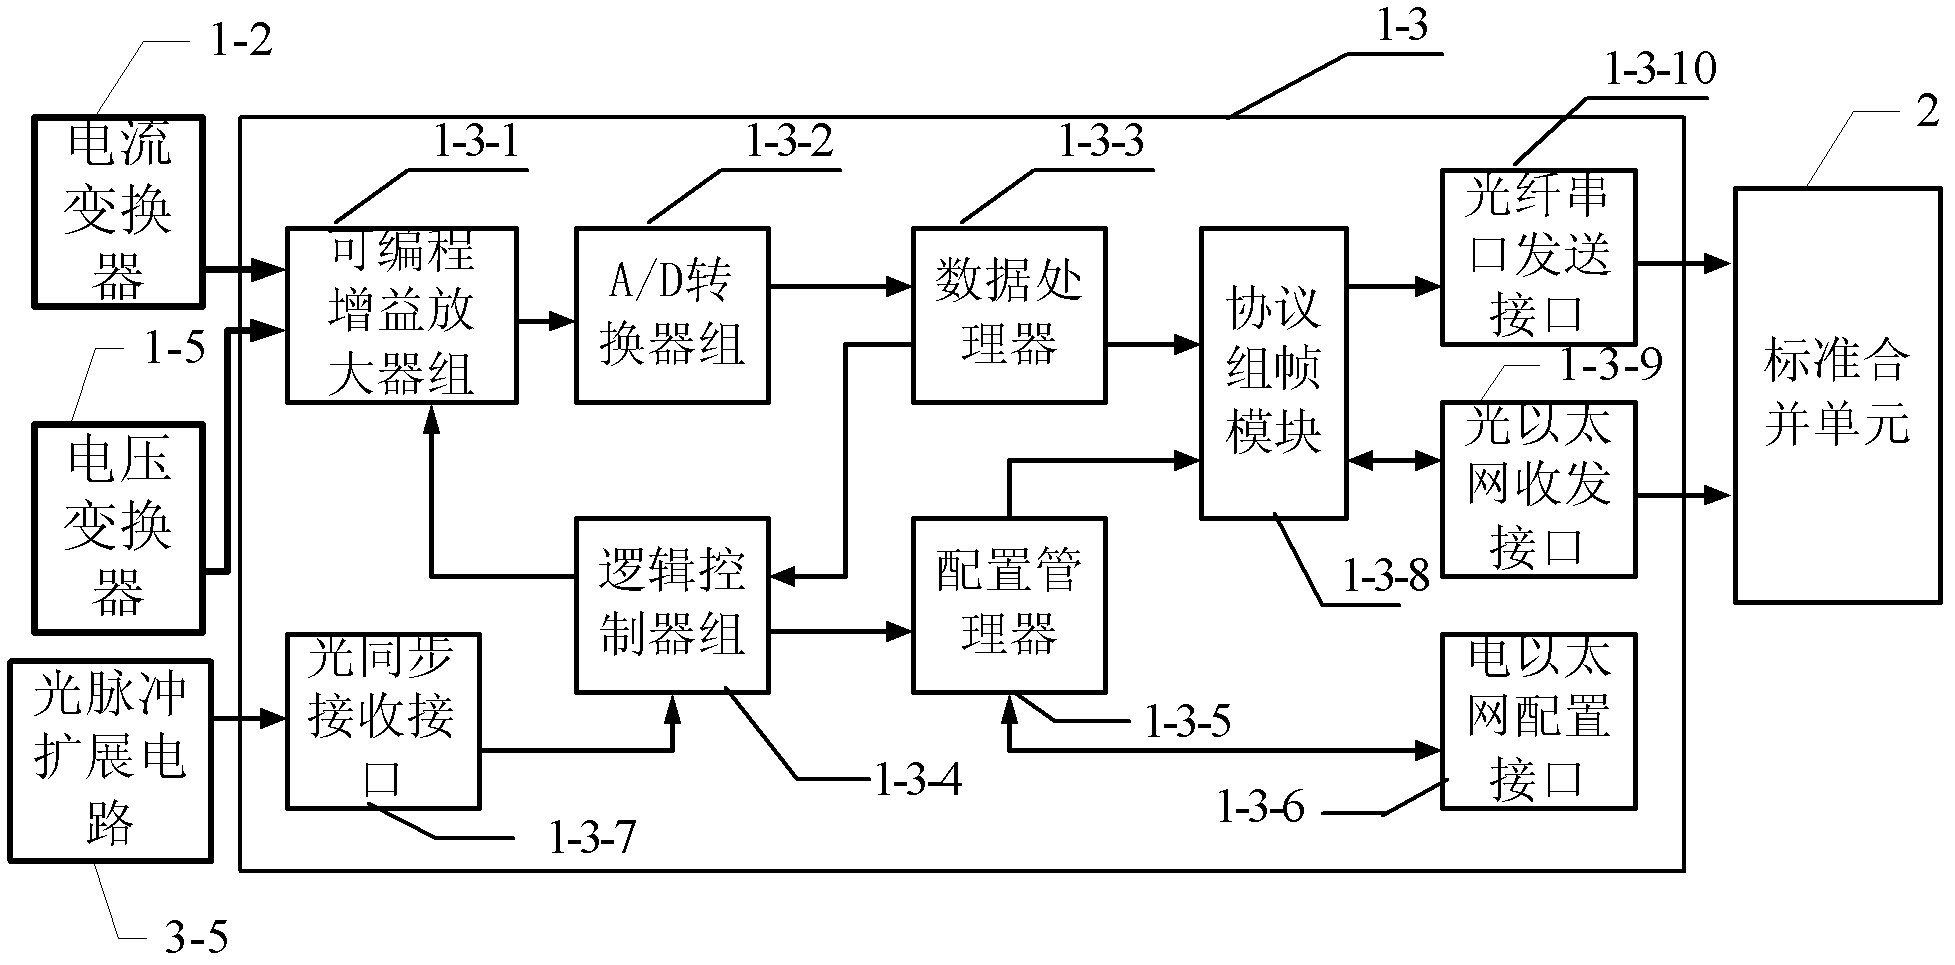 Electronic transformer verifying device